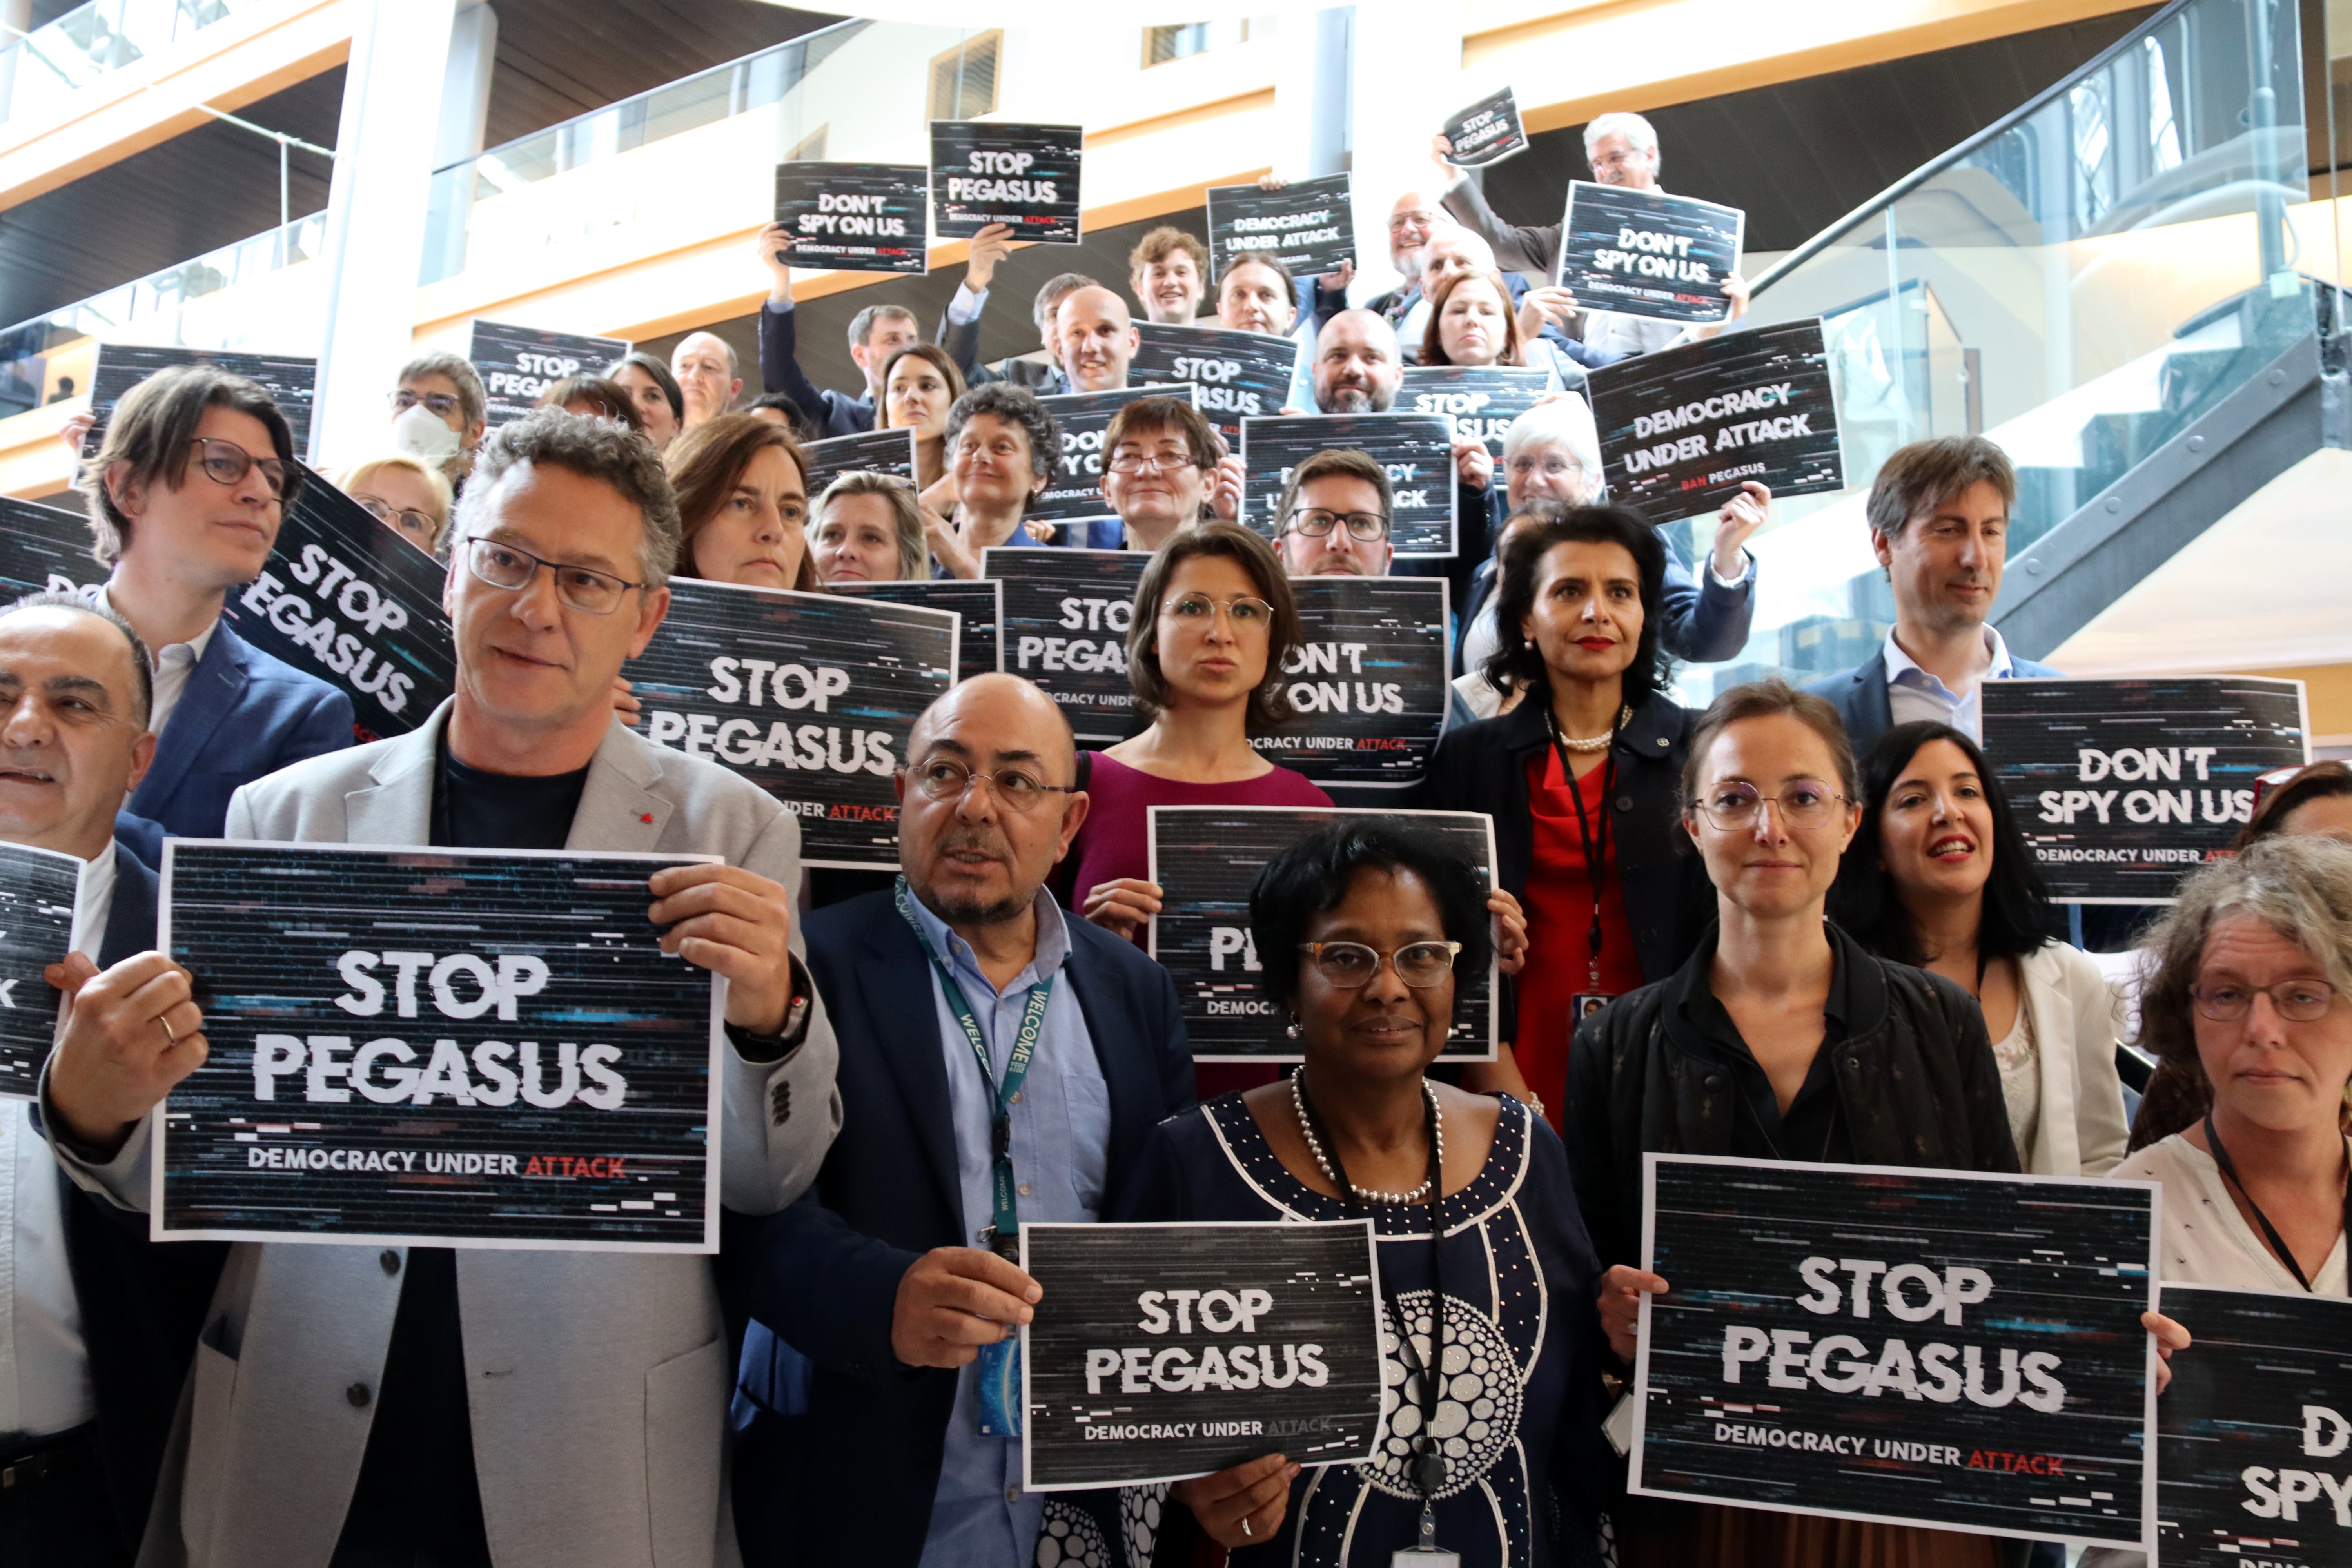 Catalangate | Spain raises its voice in European Parliament's session on Pegasus